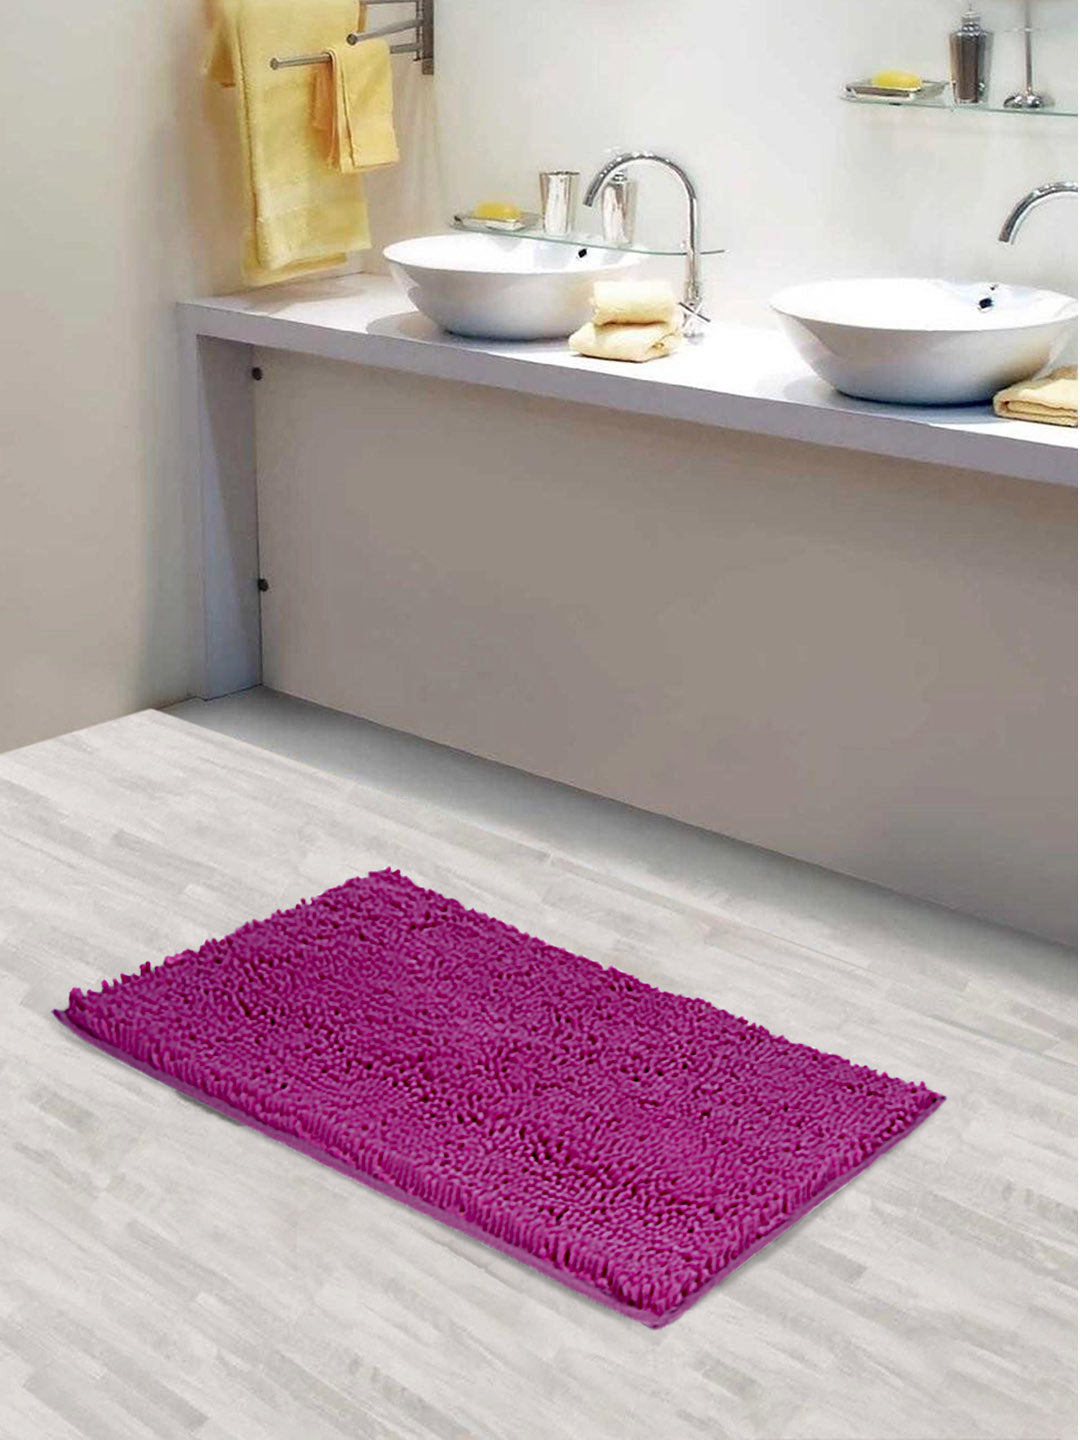 Lushomes Bathroom Mat, 2200 GSM Floor, bath mat Mat with High Pile Microfiber, anti skid mat for bathroom Floor, bath mat Non Slip Anti Slip, Premium Quality (20 x 30 inches, Single Pc, Rose Pink)